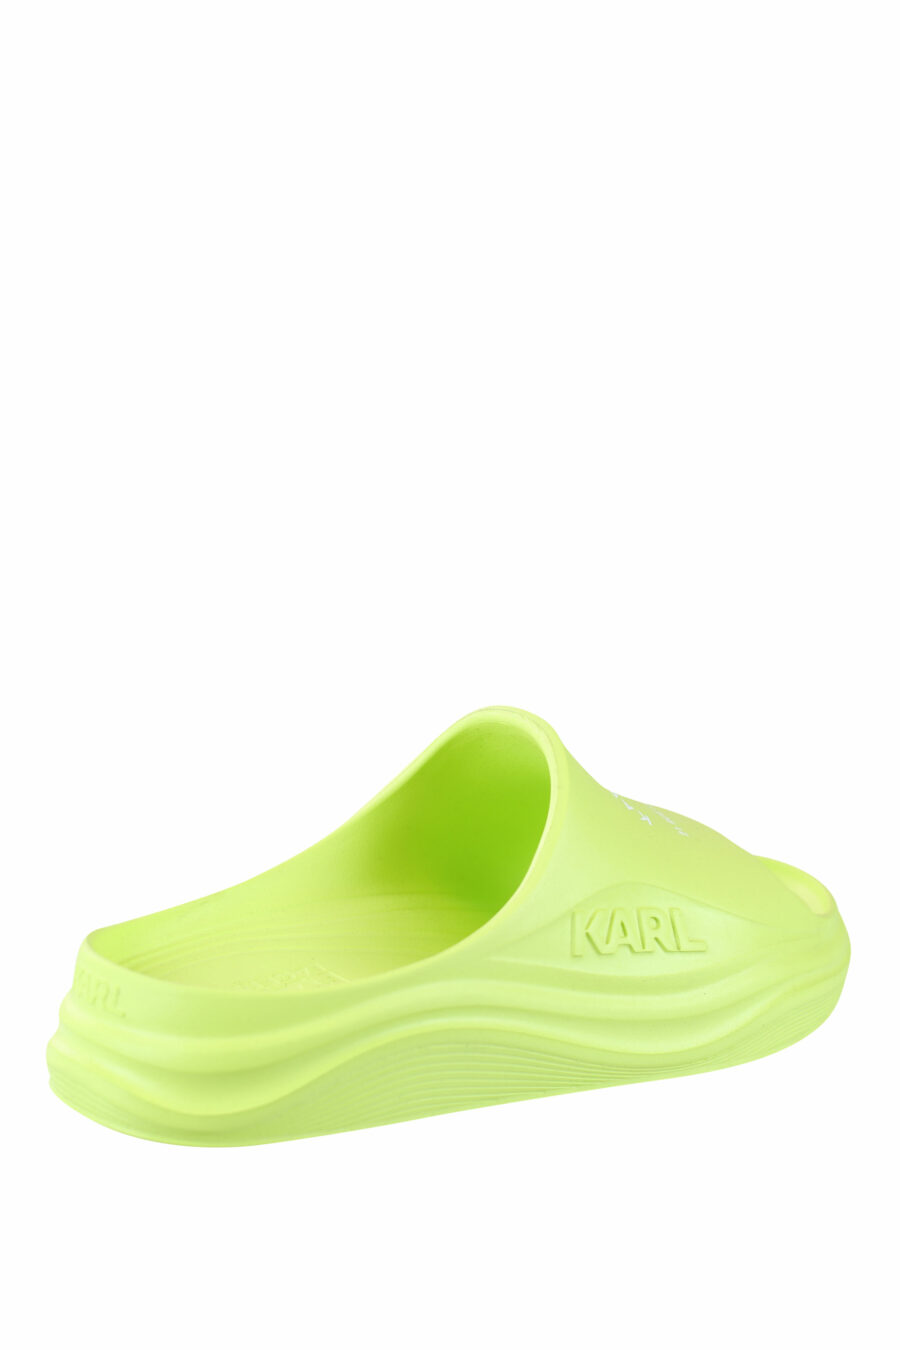 Green eco flip flops with monochrome logo - IMG 0046